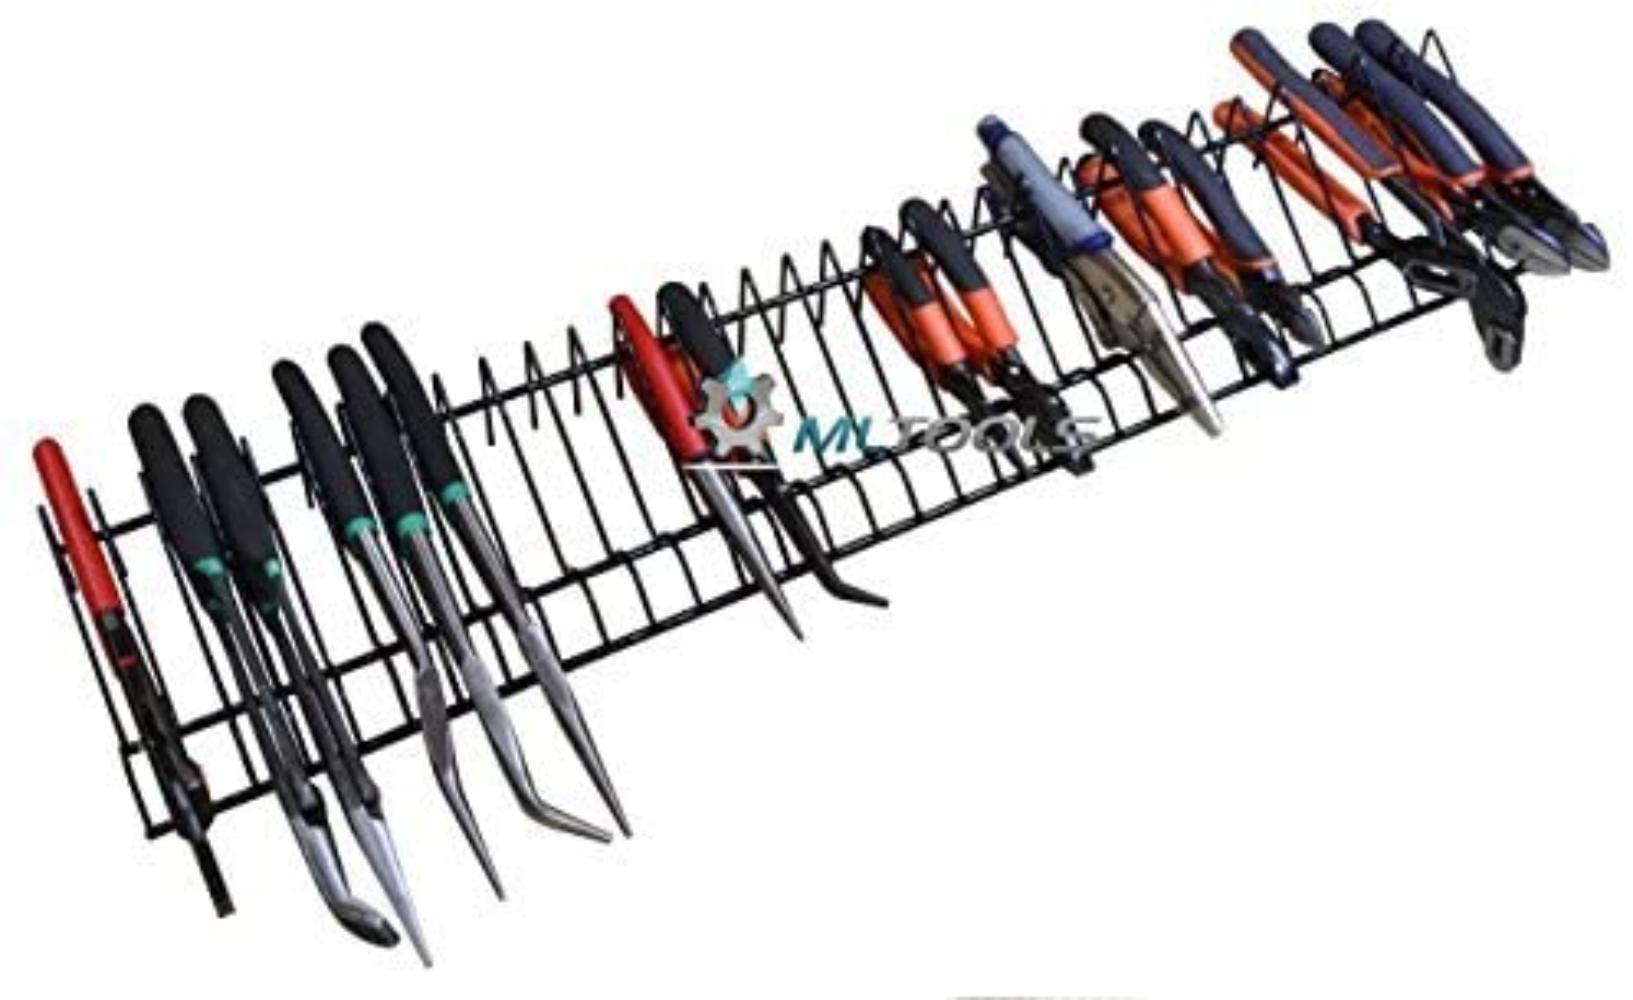 32 Tools Pliers Cutters Organizer Garage Tool Storage Rack Holder Drawer Box 